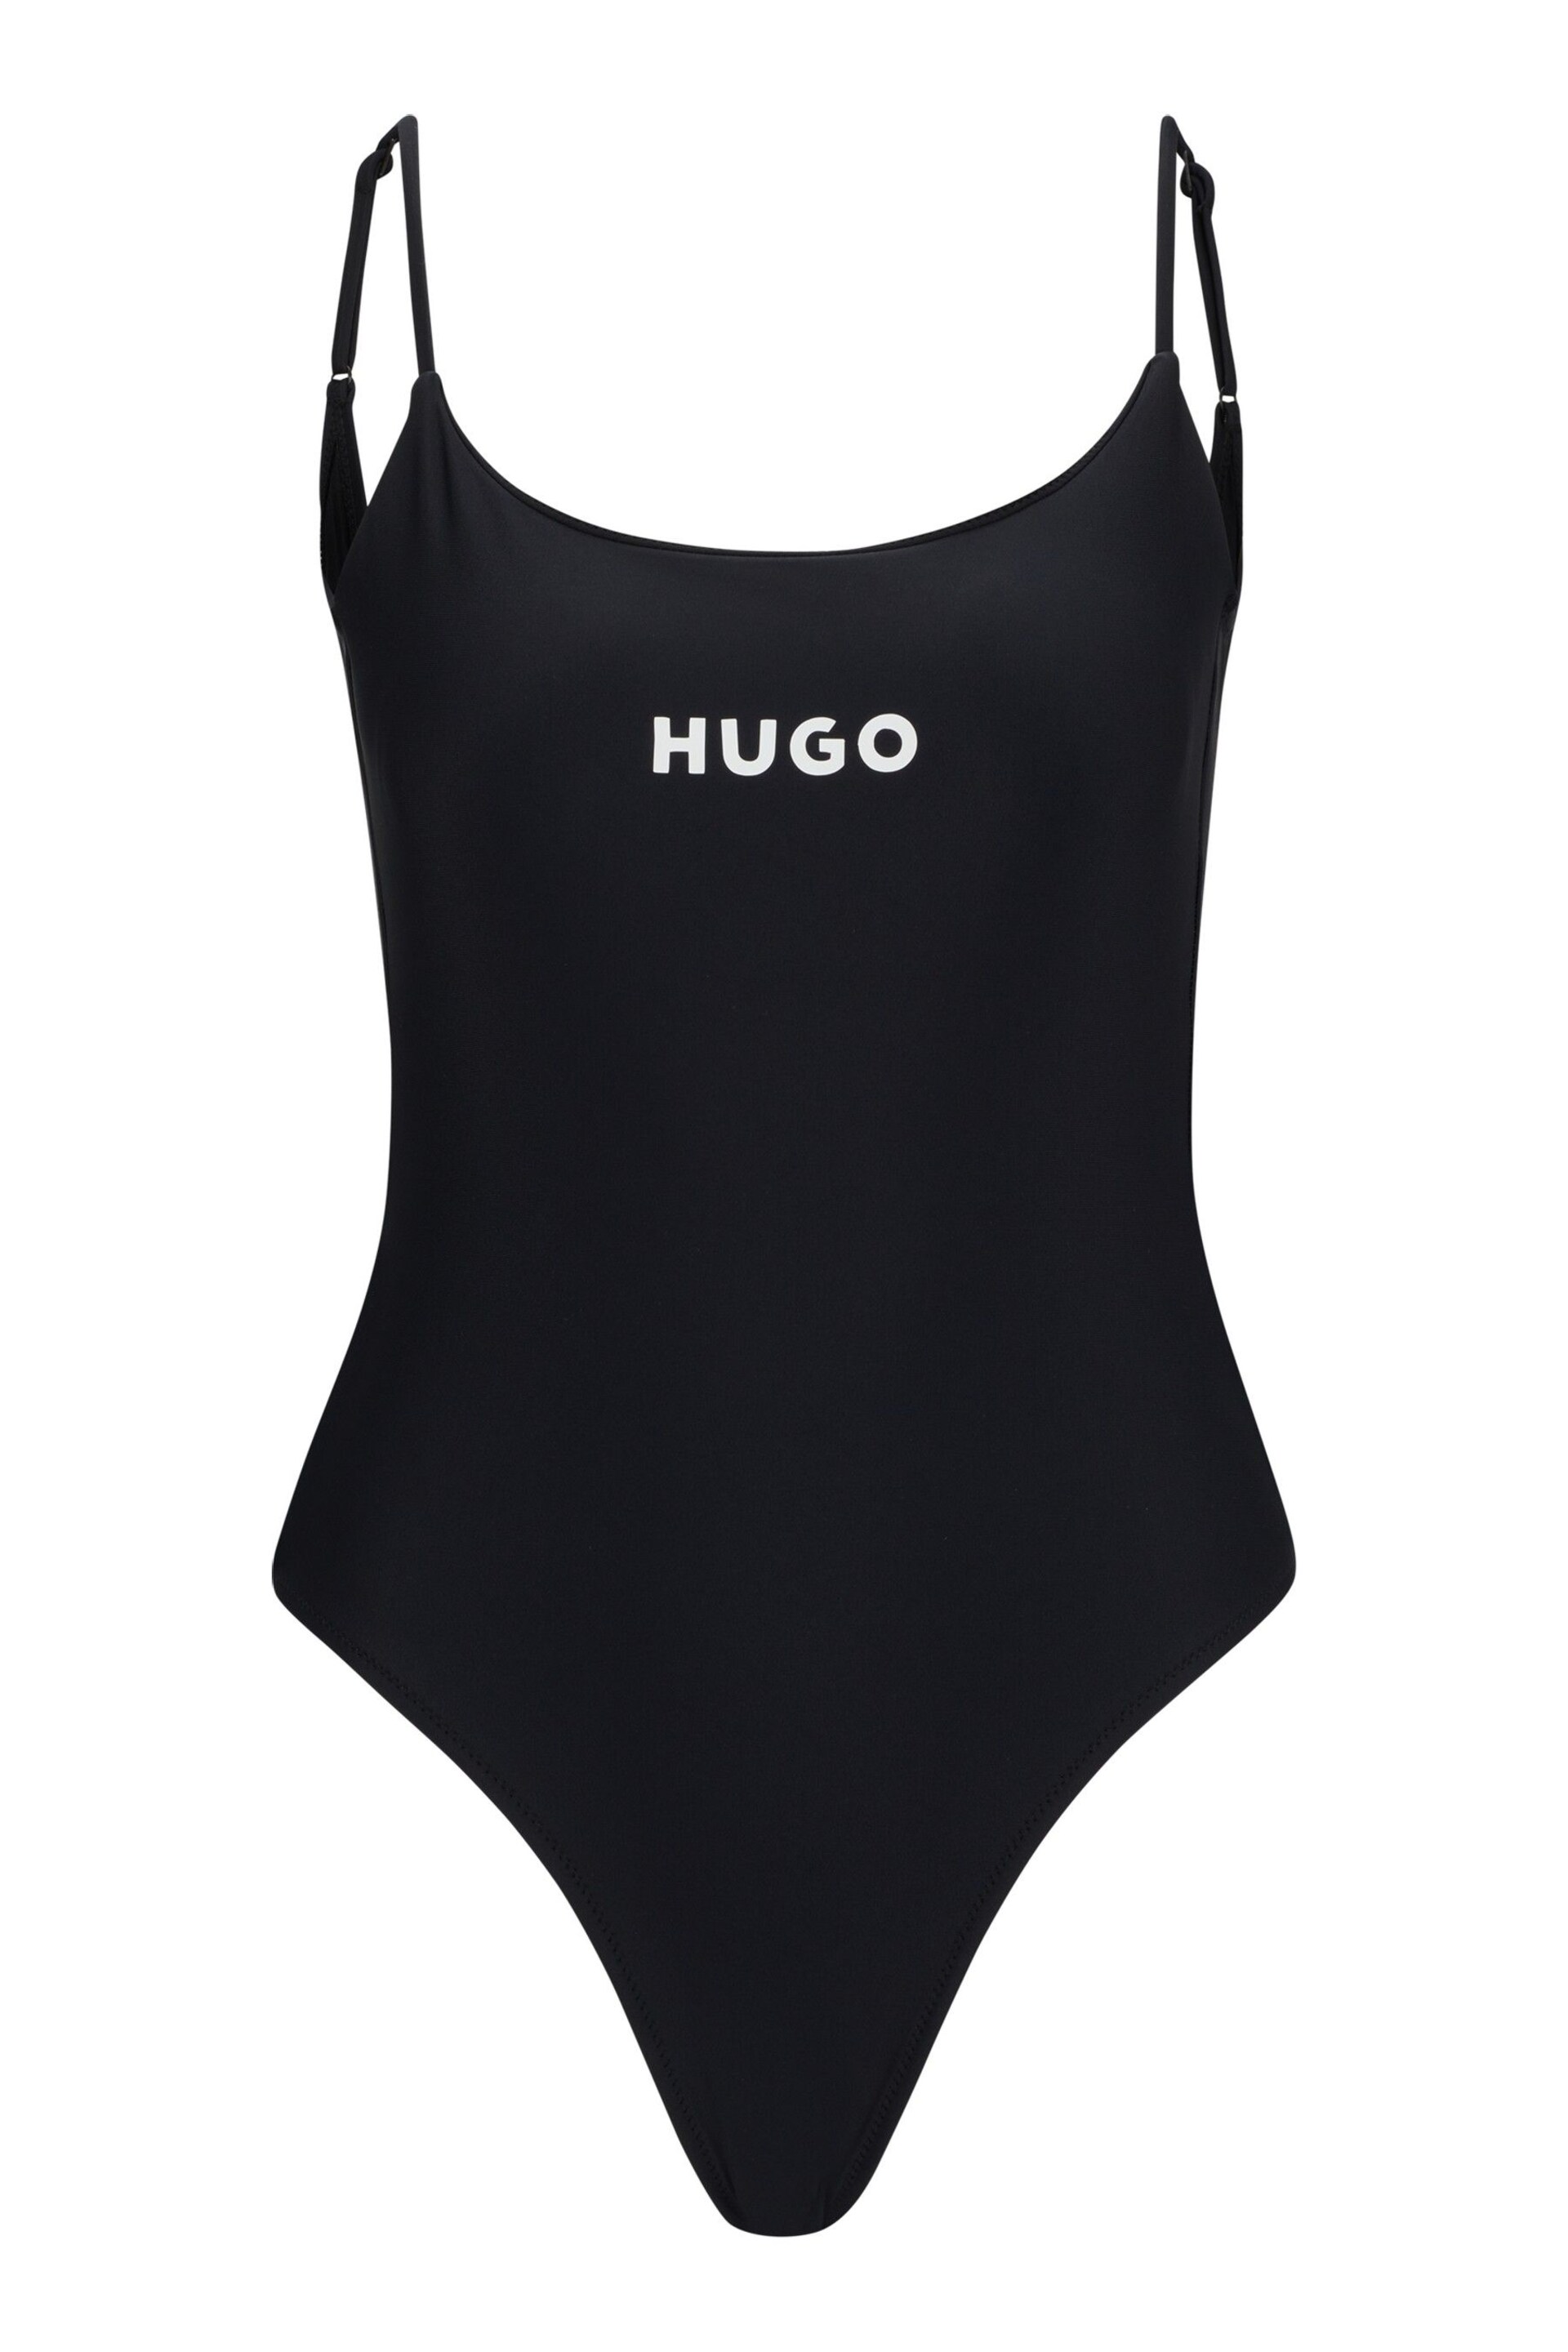 HUGO Quick-Dry Contrast Logo Swimsuit - Image 6 of 6